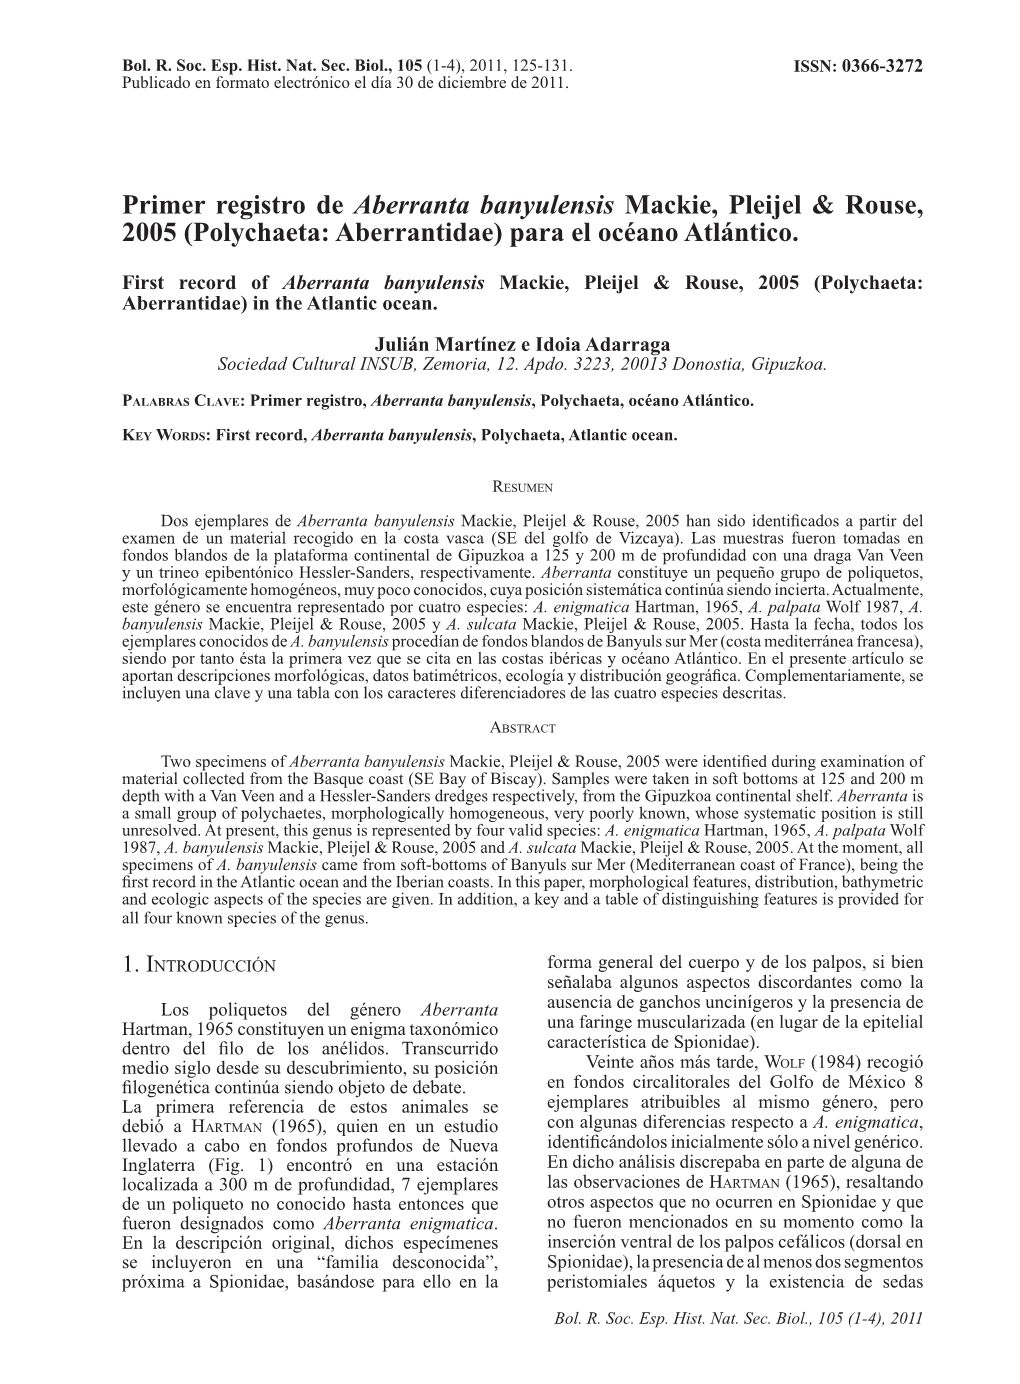 Primer Registro De Aberranta Banyulensis Mackie, Pleijel & Rouse, 2005 (Polychaeta: Aberrantidae) Para El Océano Atlántico